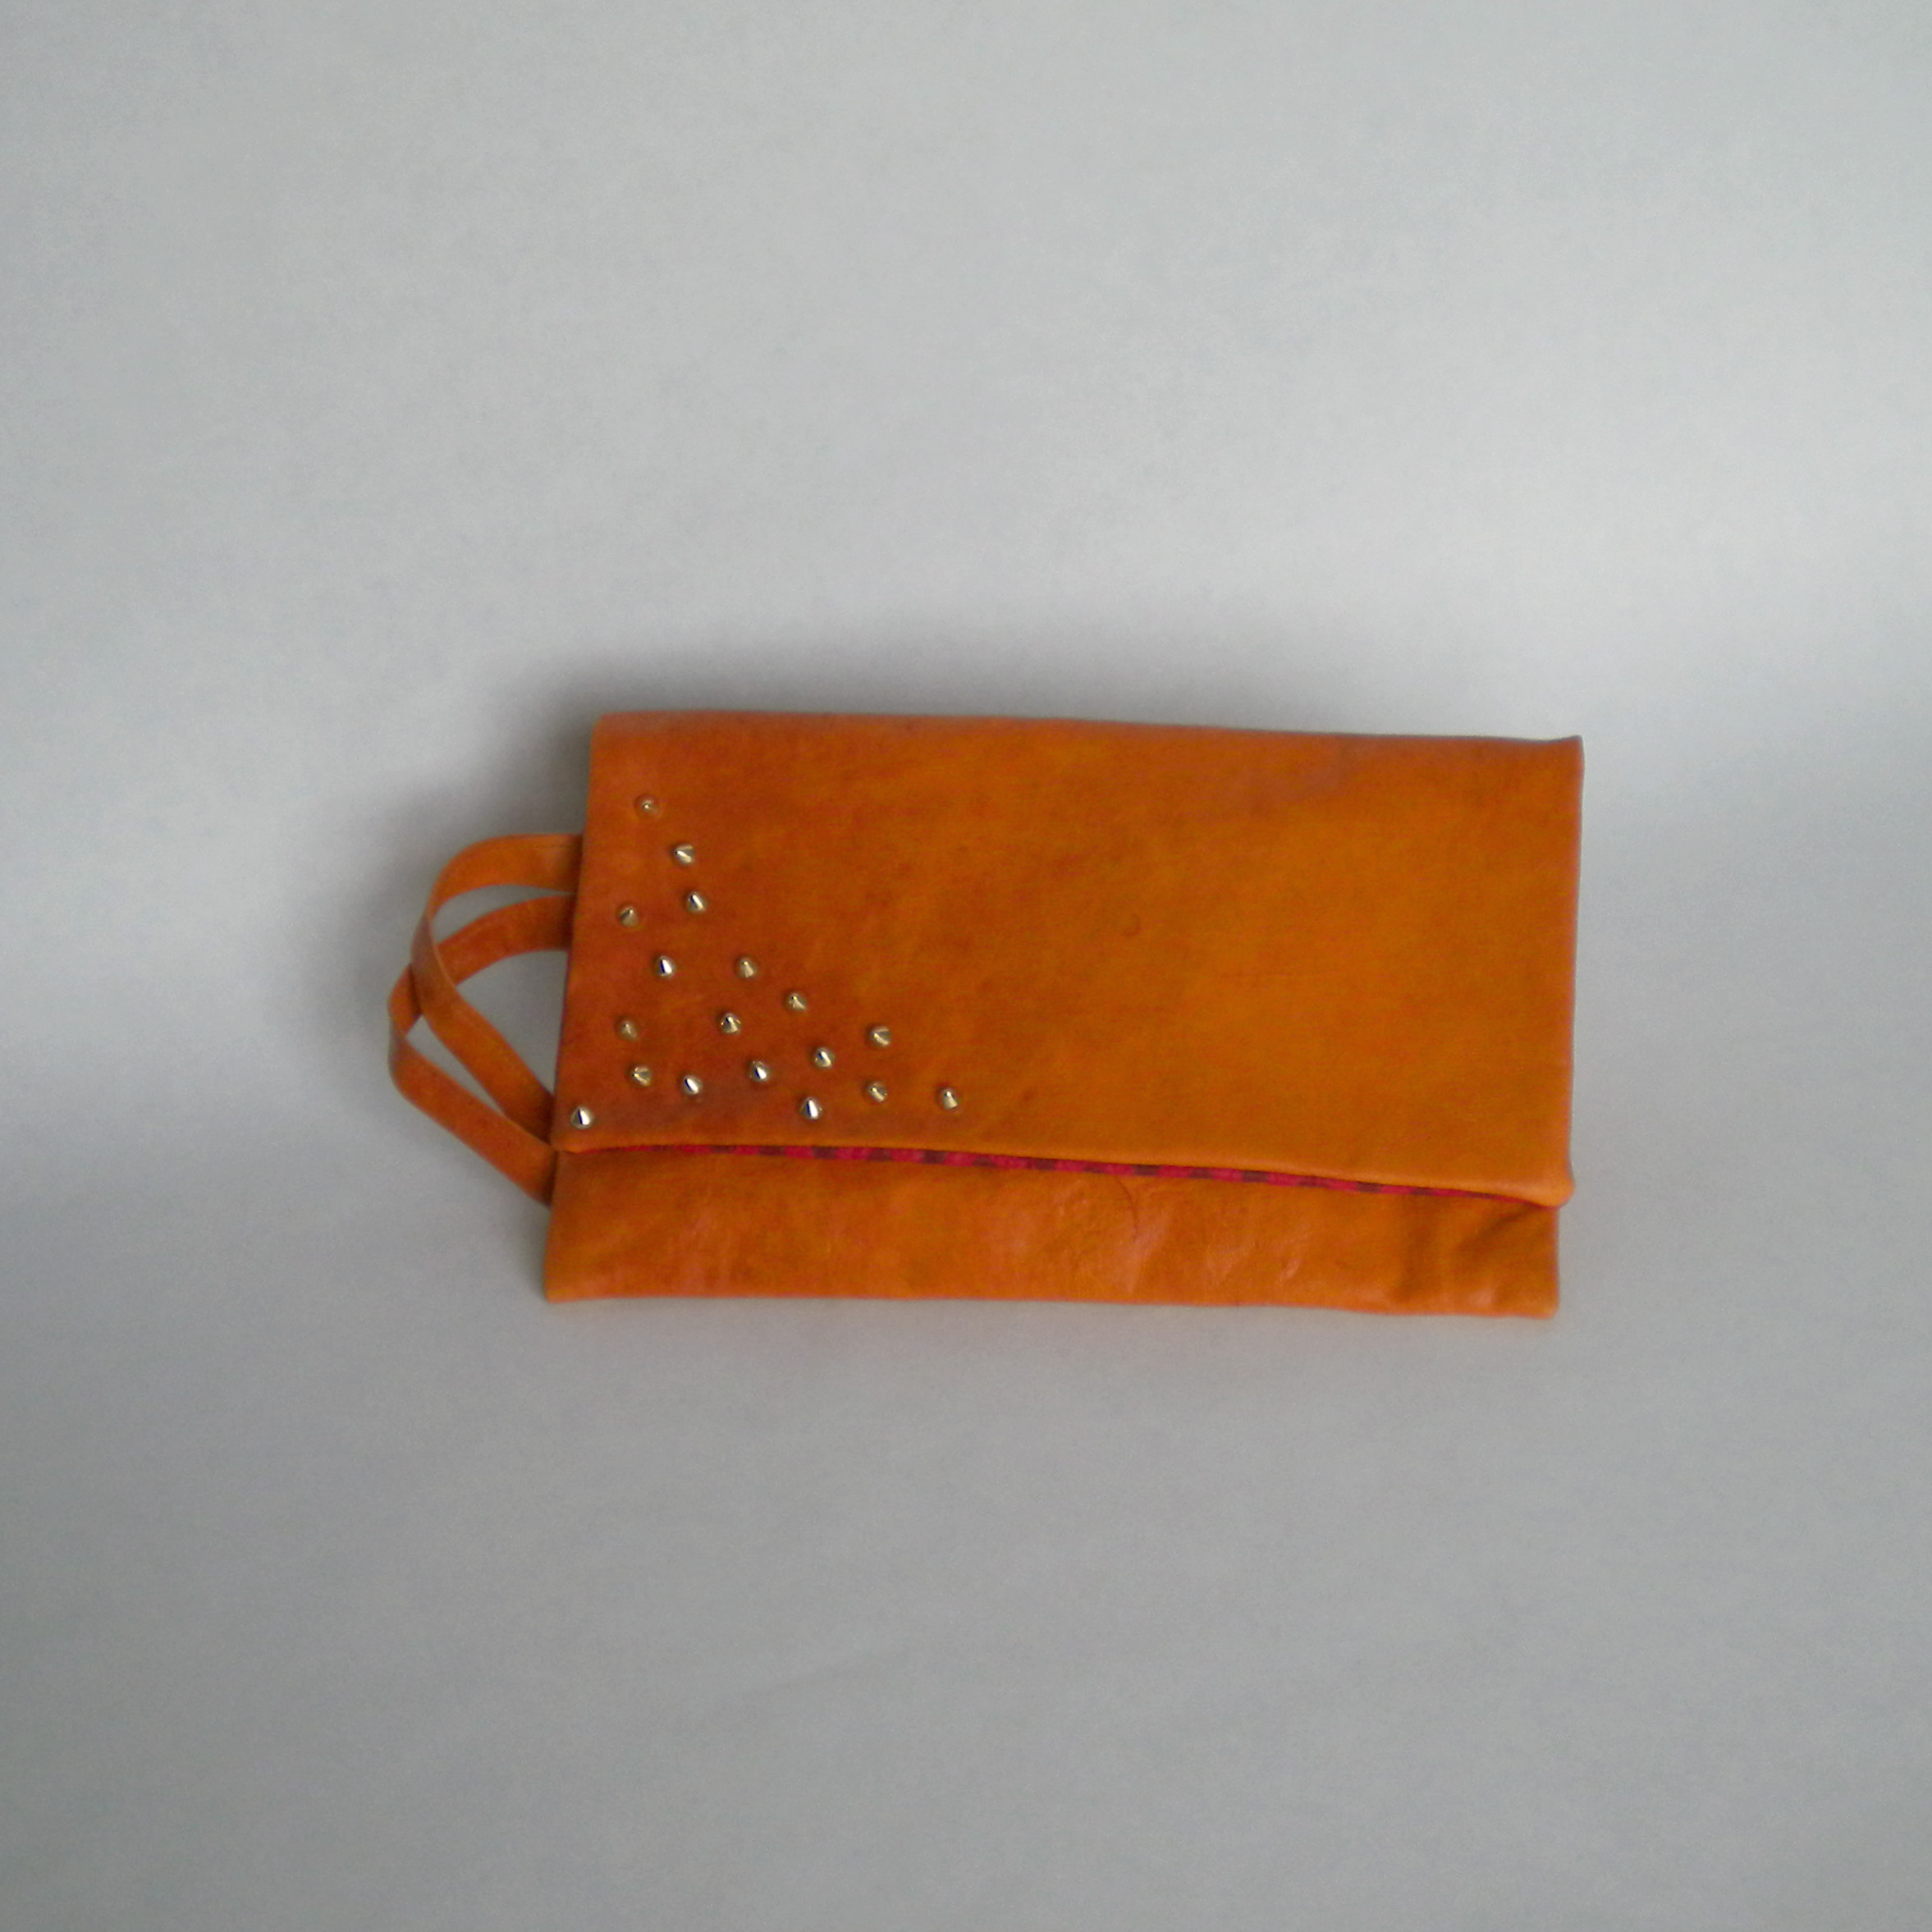  Orange leather clutch with studs 